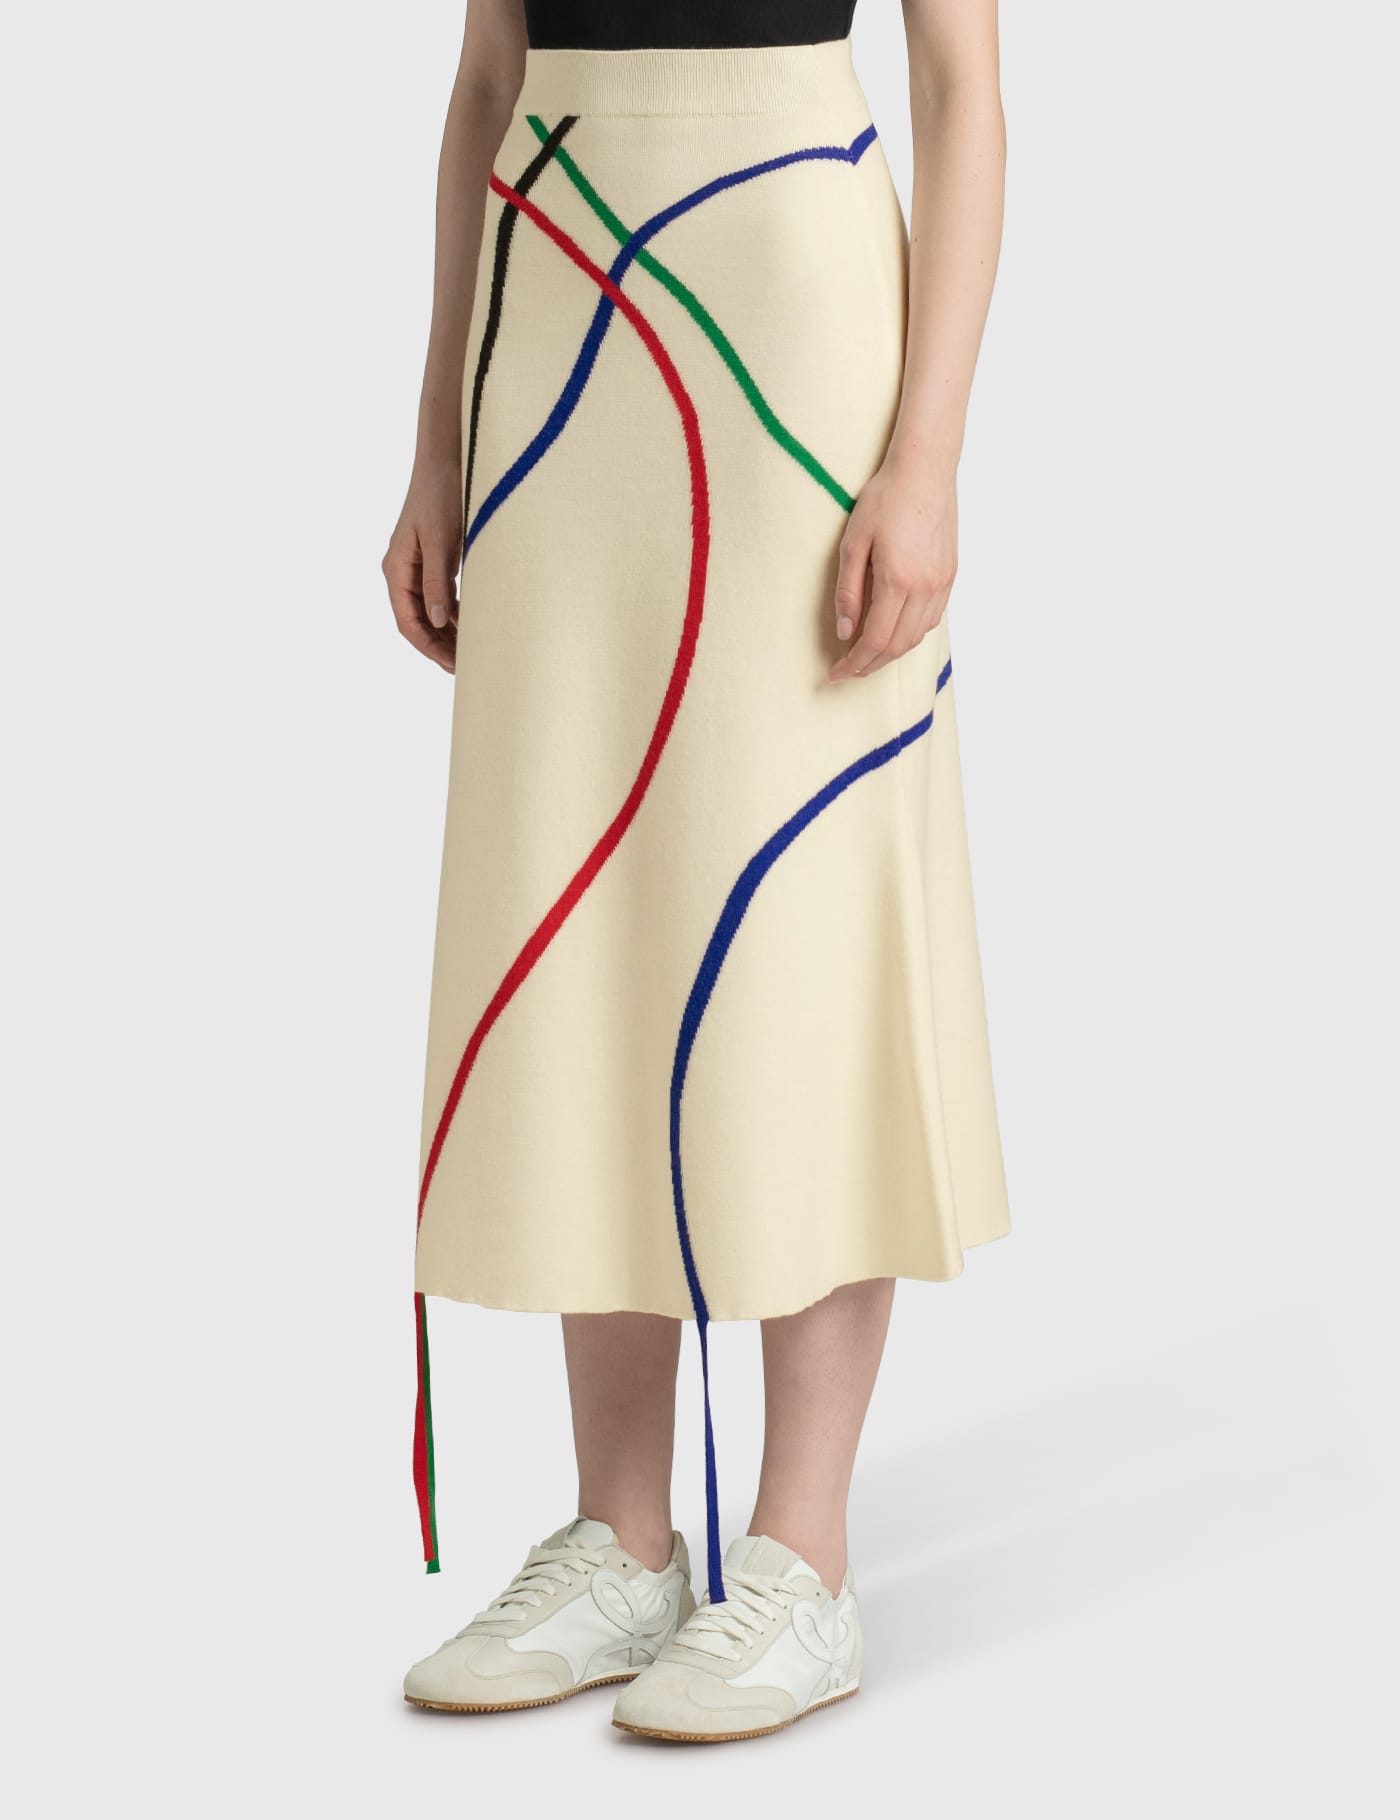 Loewe - Intarsia Flared Skirt | HBX - Globally Curated Fashion and 